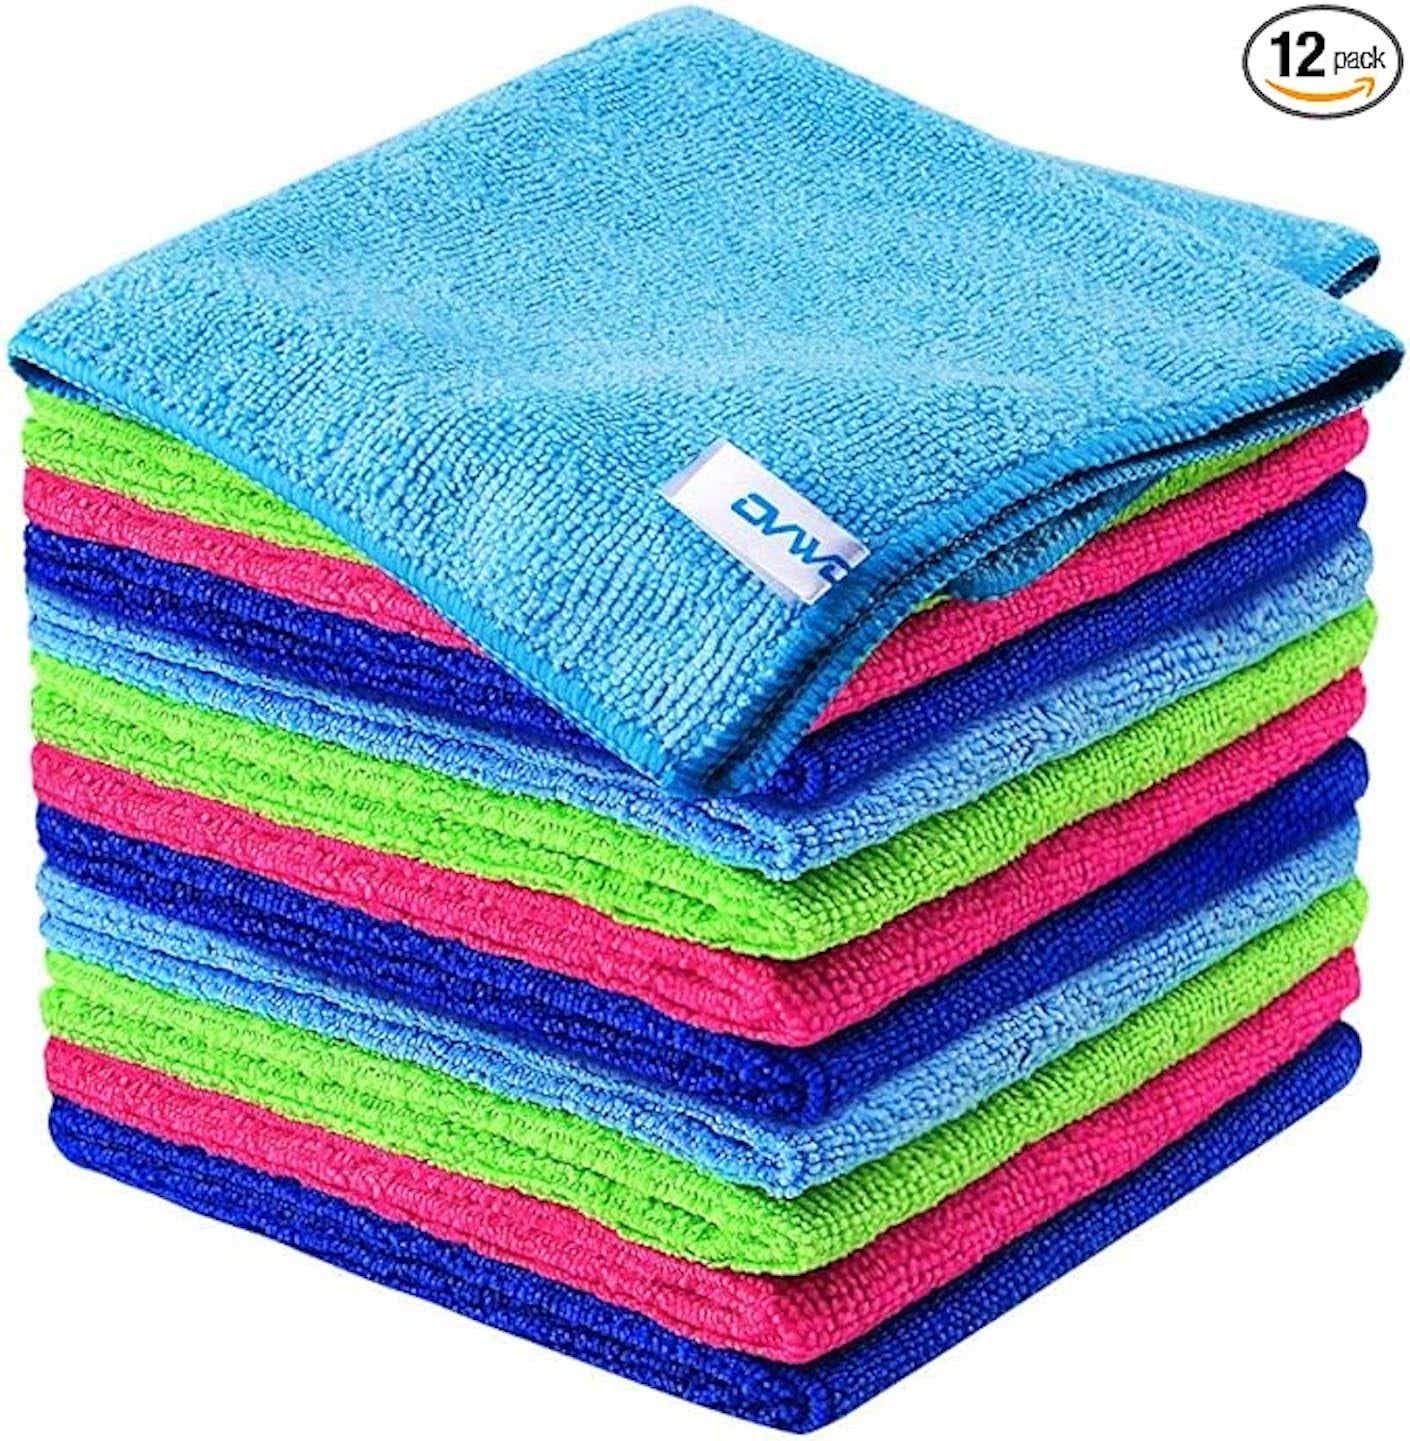 A stack if microfiber towels